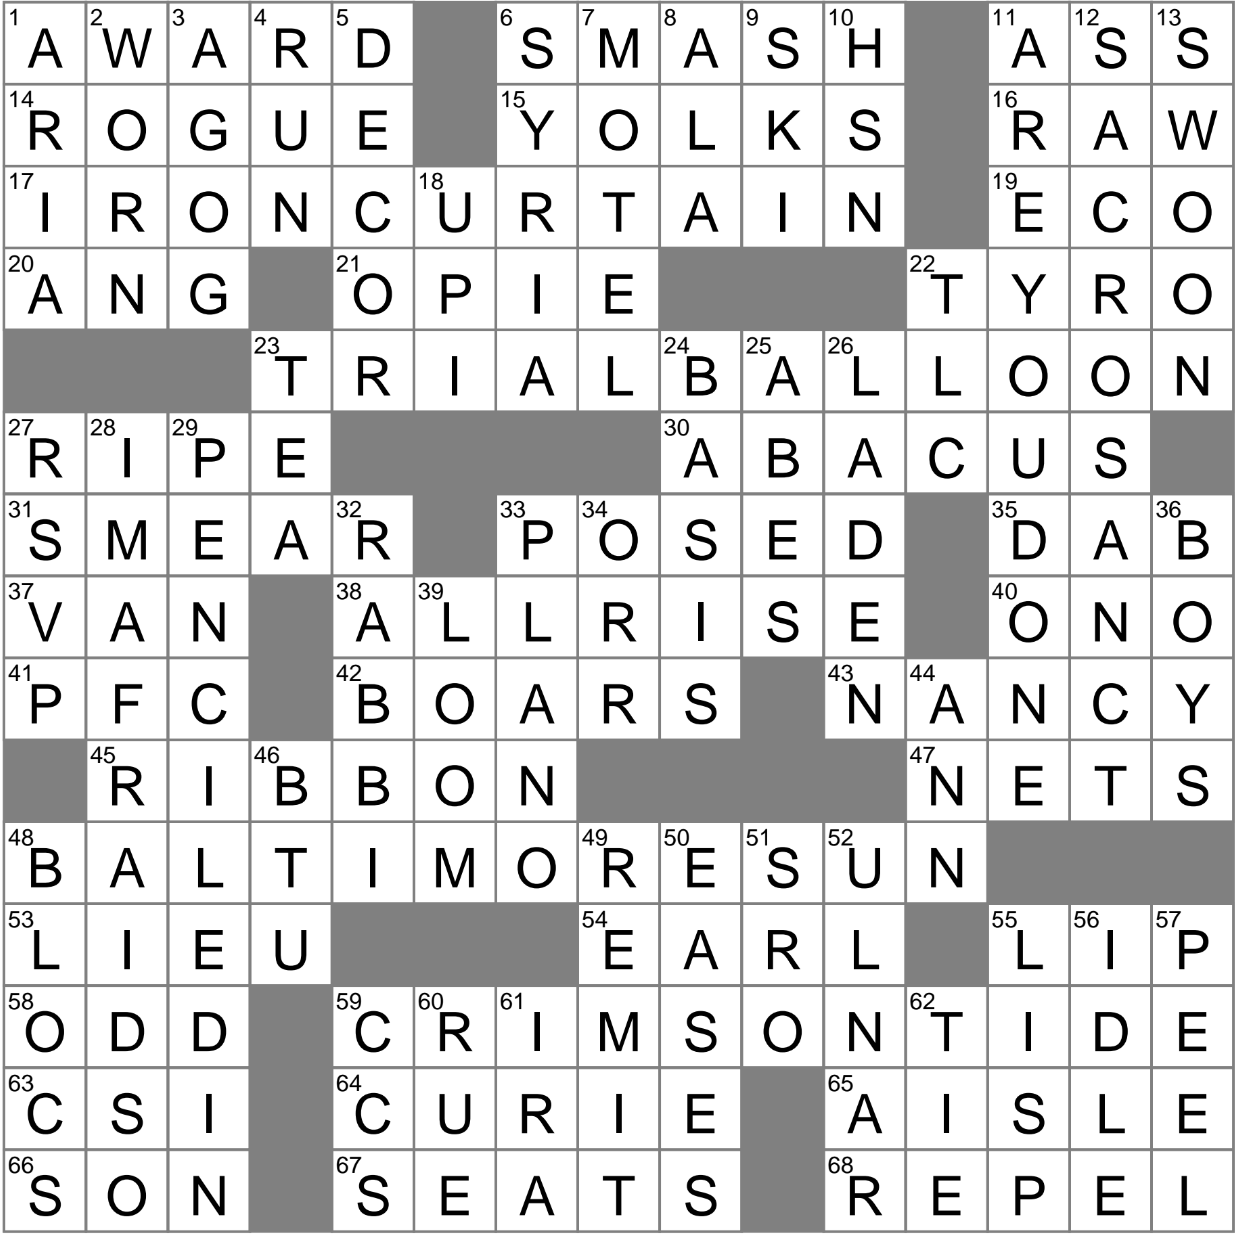 LA Times Crossword 15 May 23 Monday LAXCrossword com